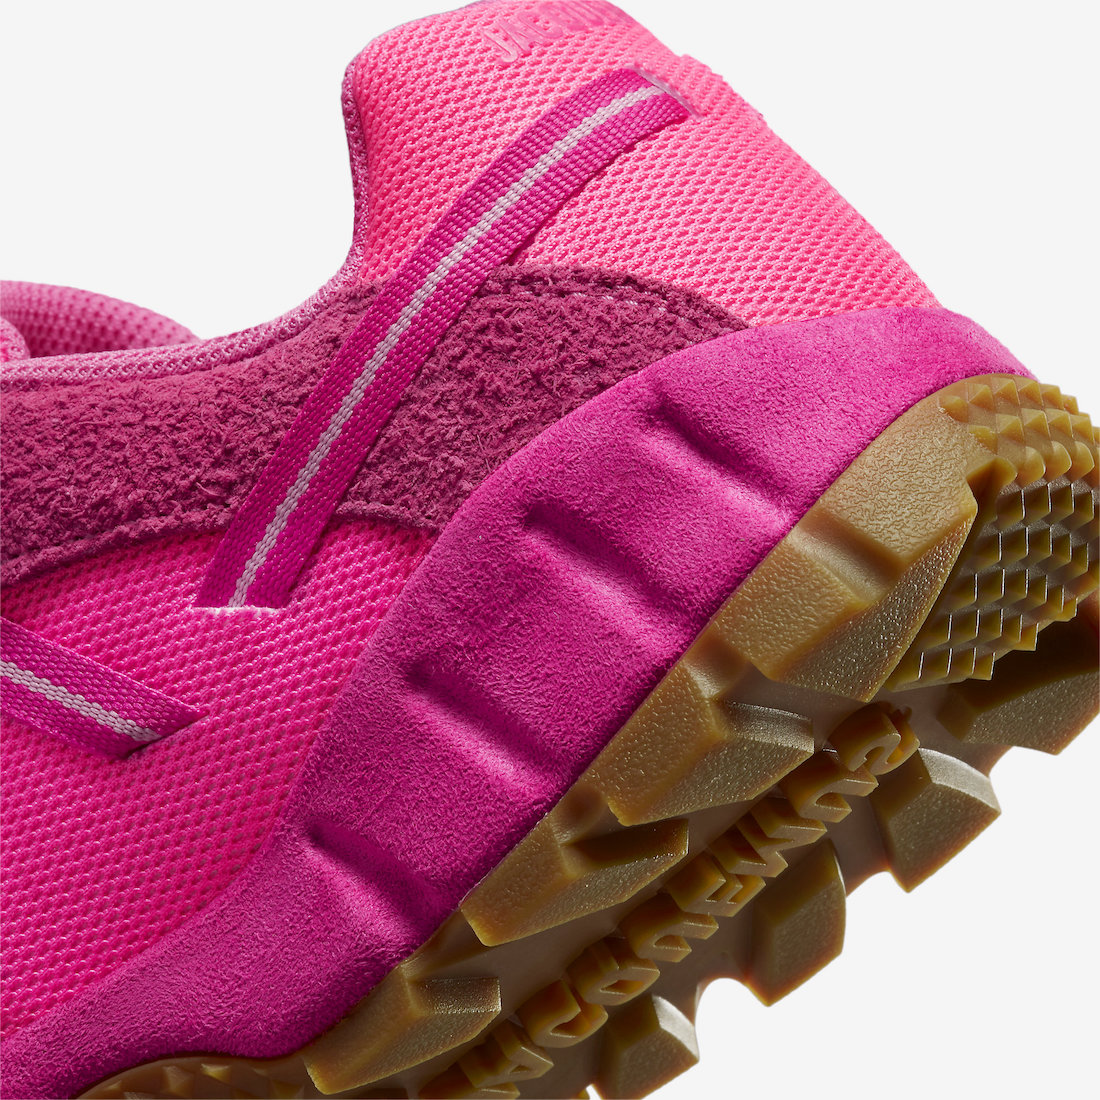 Jacquemus Nike Air Humara Pink DX9999-600 Release Date